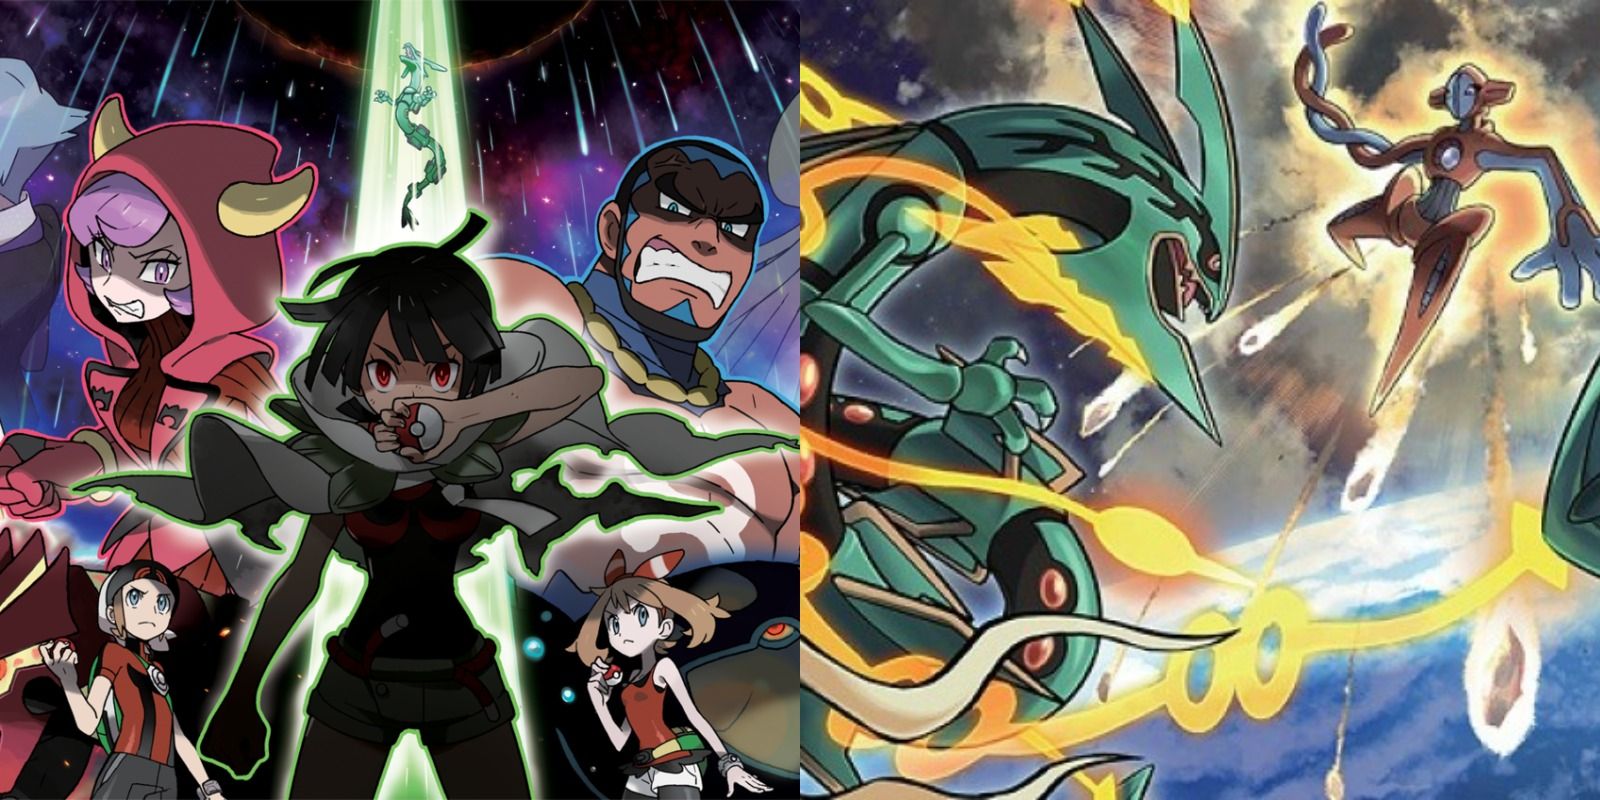 Pokémon Promo art of the Delta Episode and Mega Rayquaza vs. Deoxys